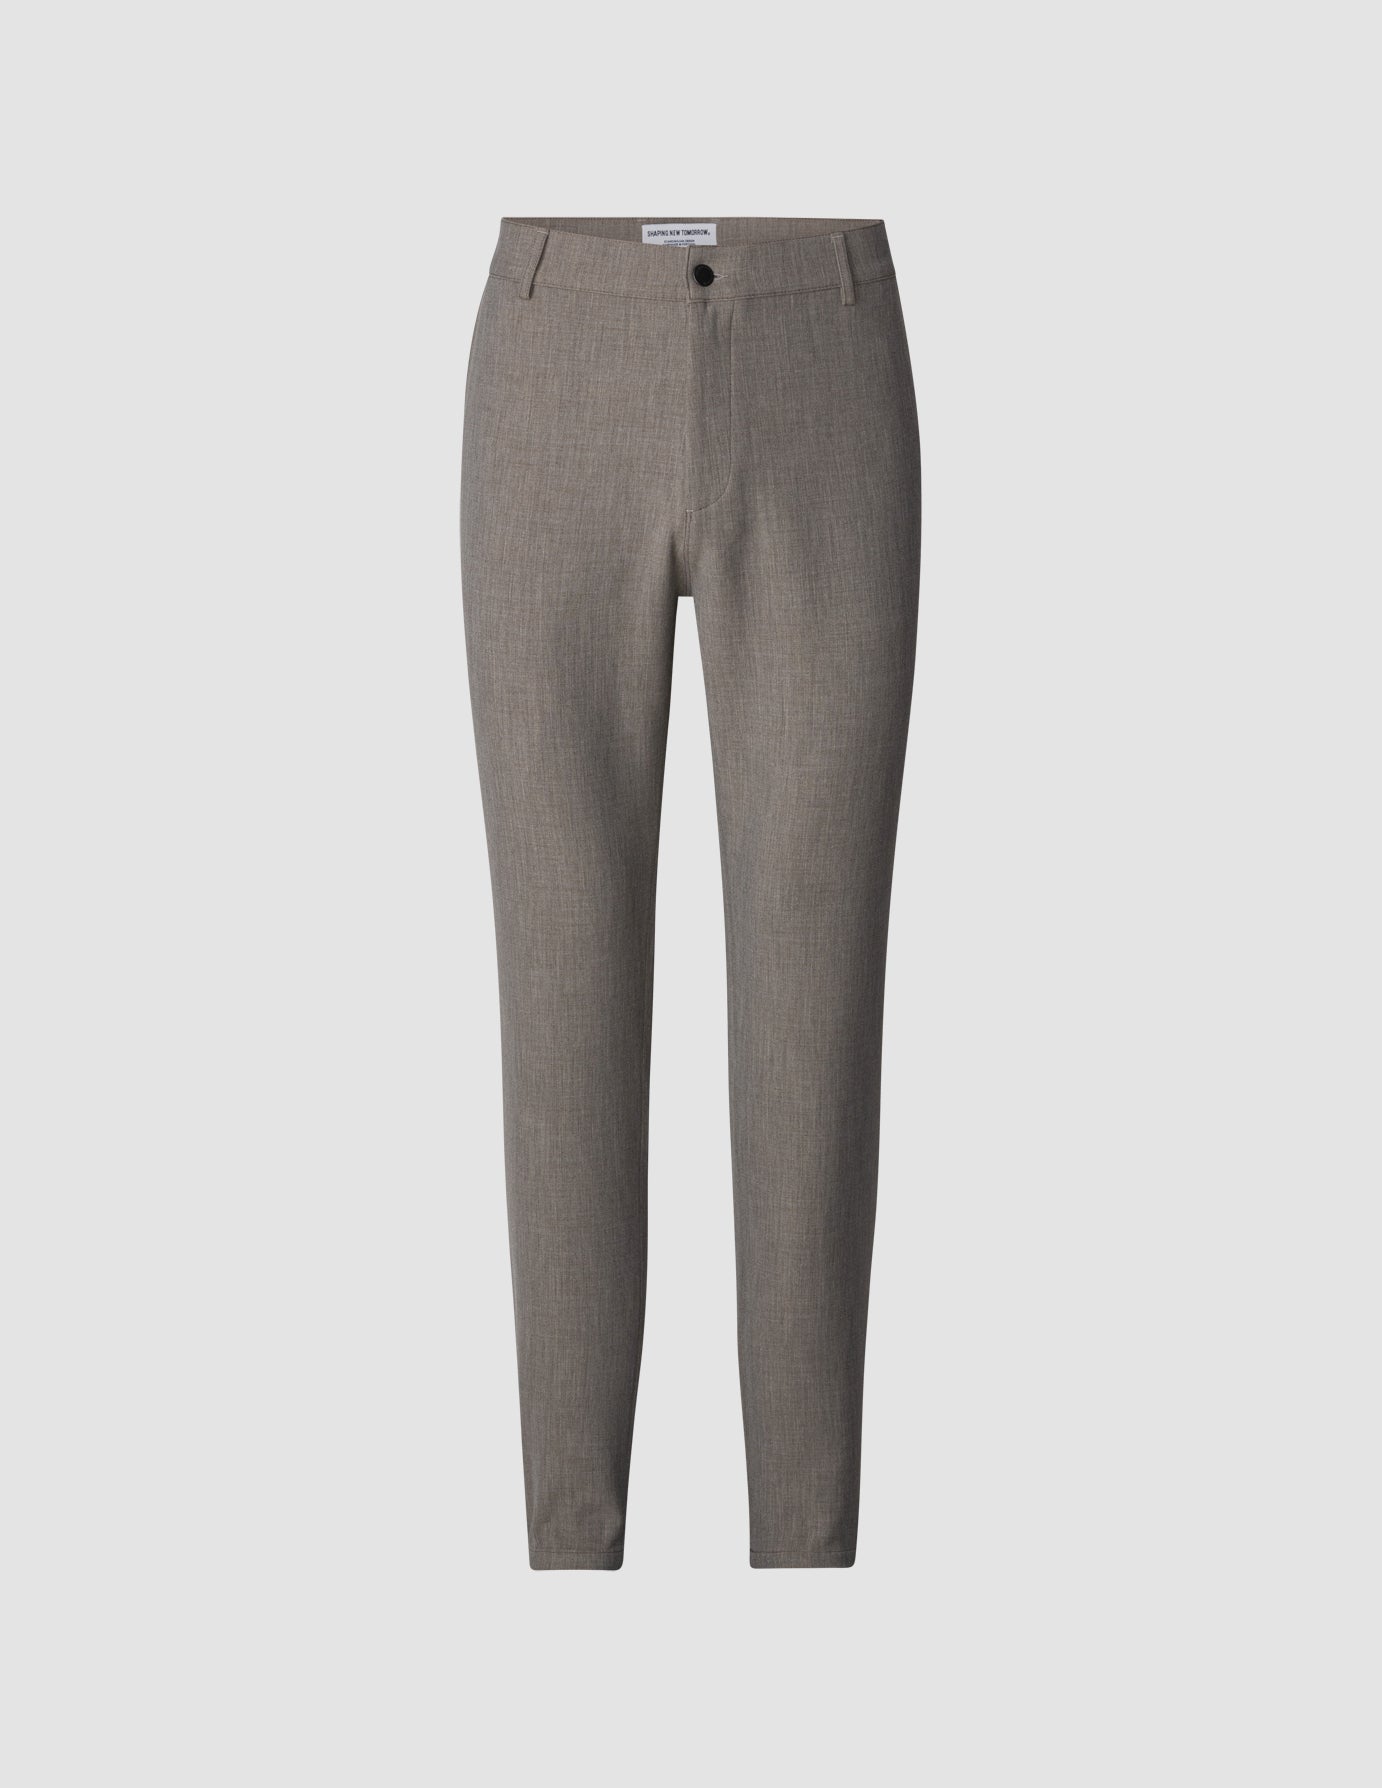 Vintage Heathered Tweed Grey Wool Knickers Selected by FernMercantile |  Free People